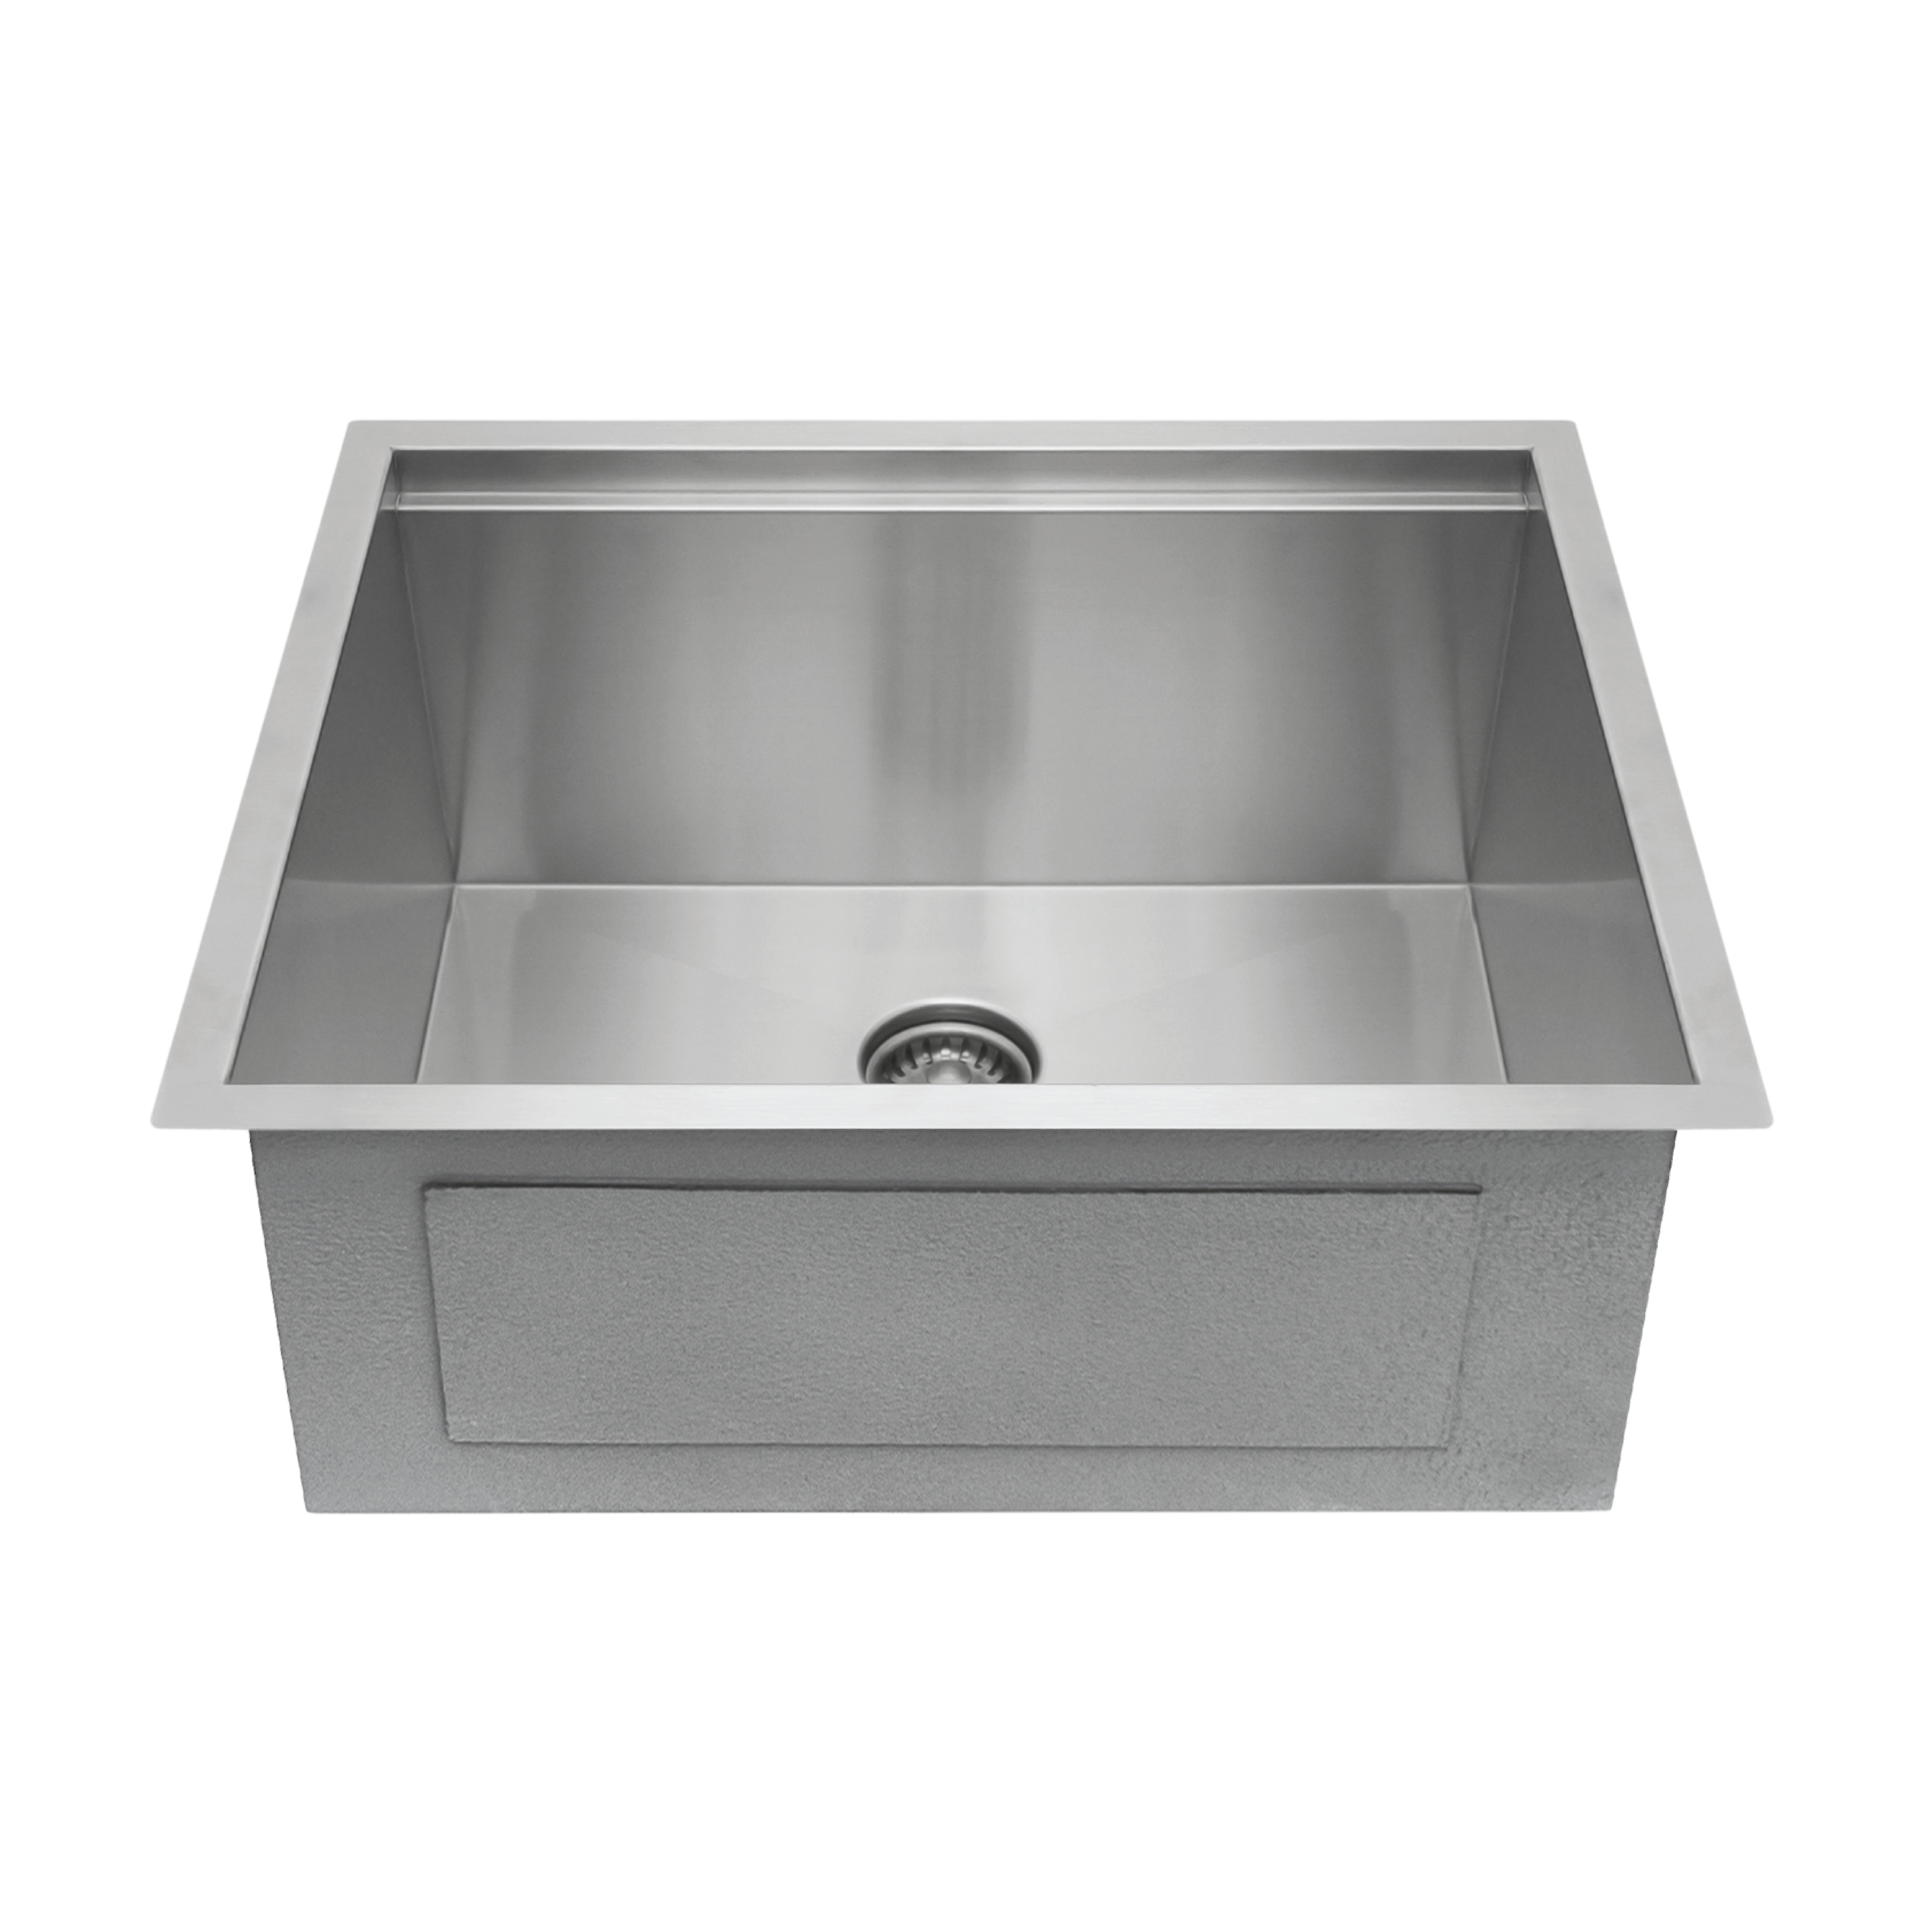 23" Stainless Steel Flow Edge Workstation Kitchen Sink with Accessories